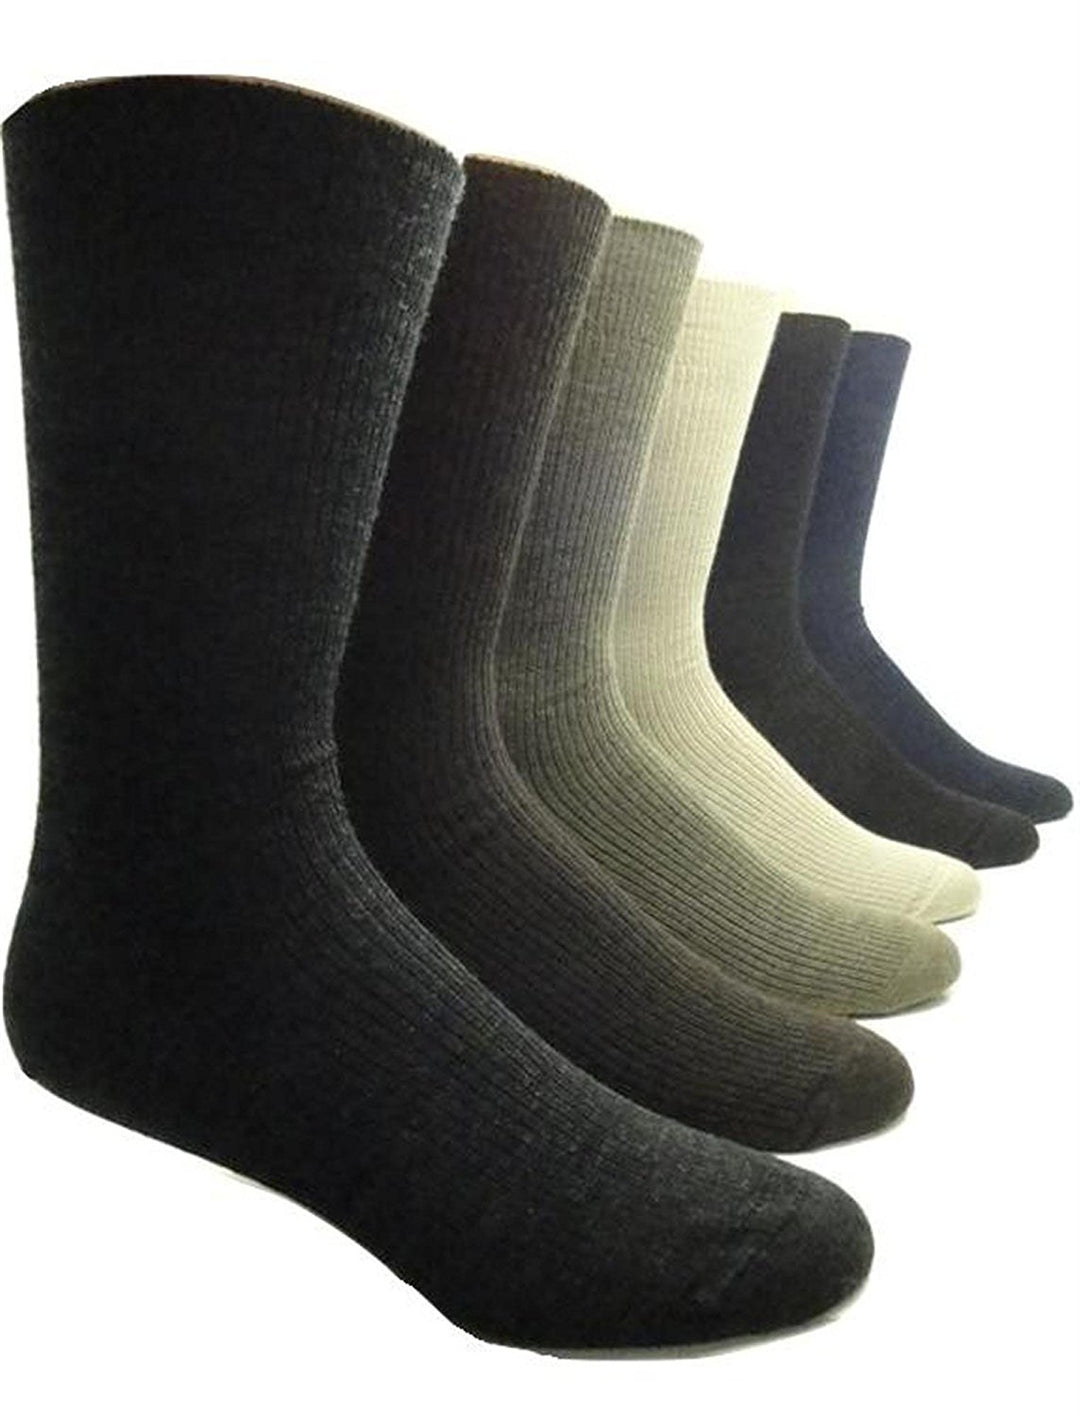 Vagden Non-Elastic Top Merino Wool Dress Diabetic Socks